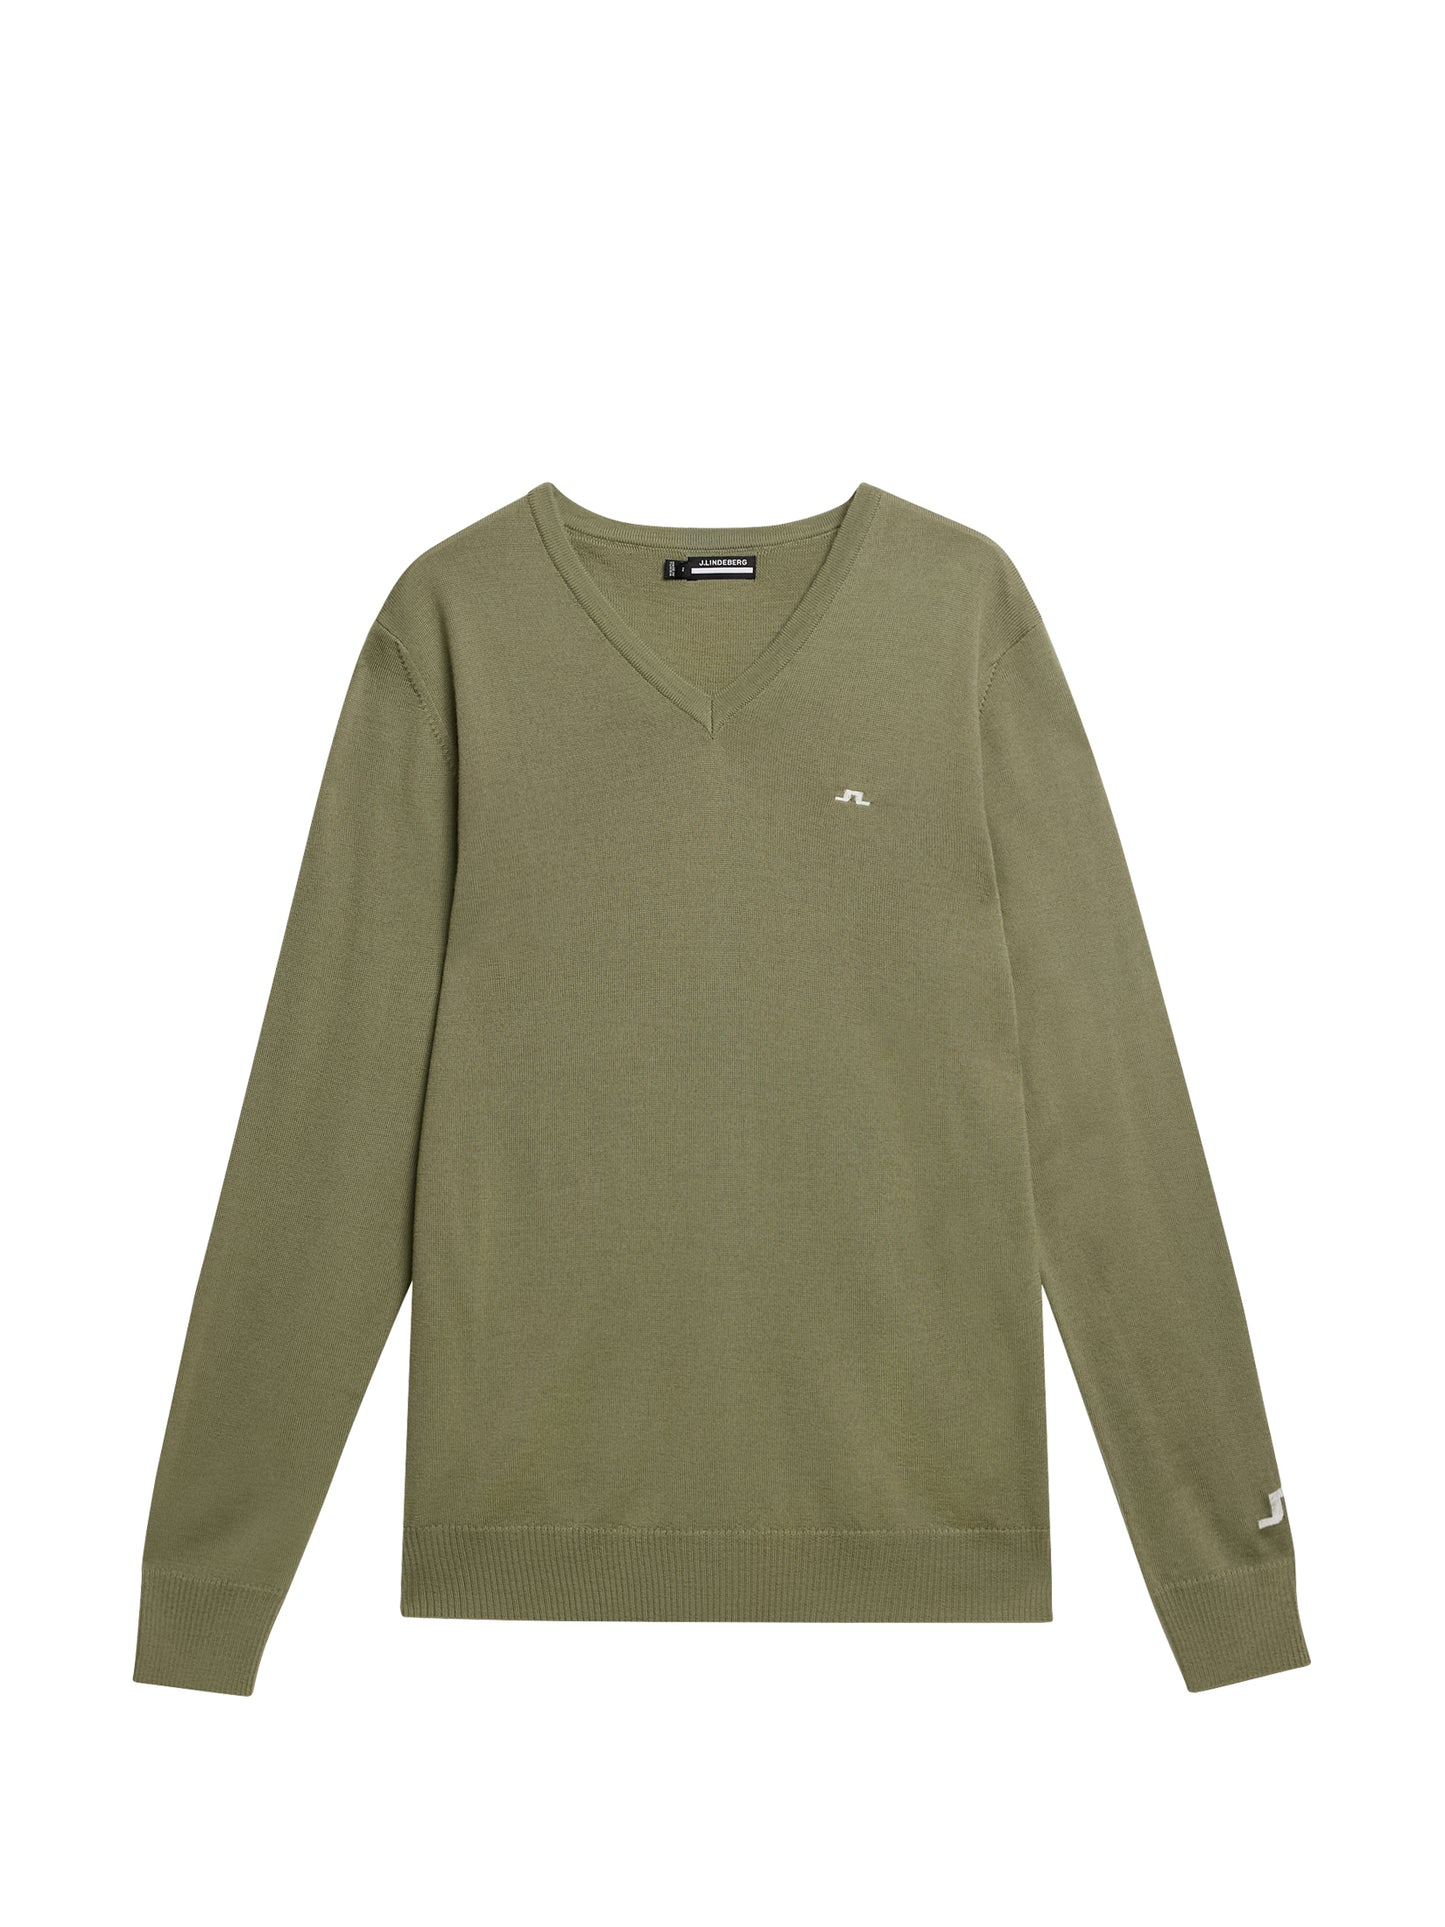 Lymann Knitted Sweater / Oil Green